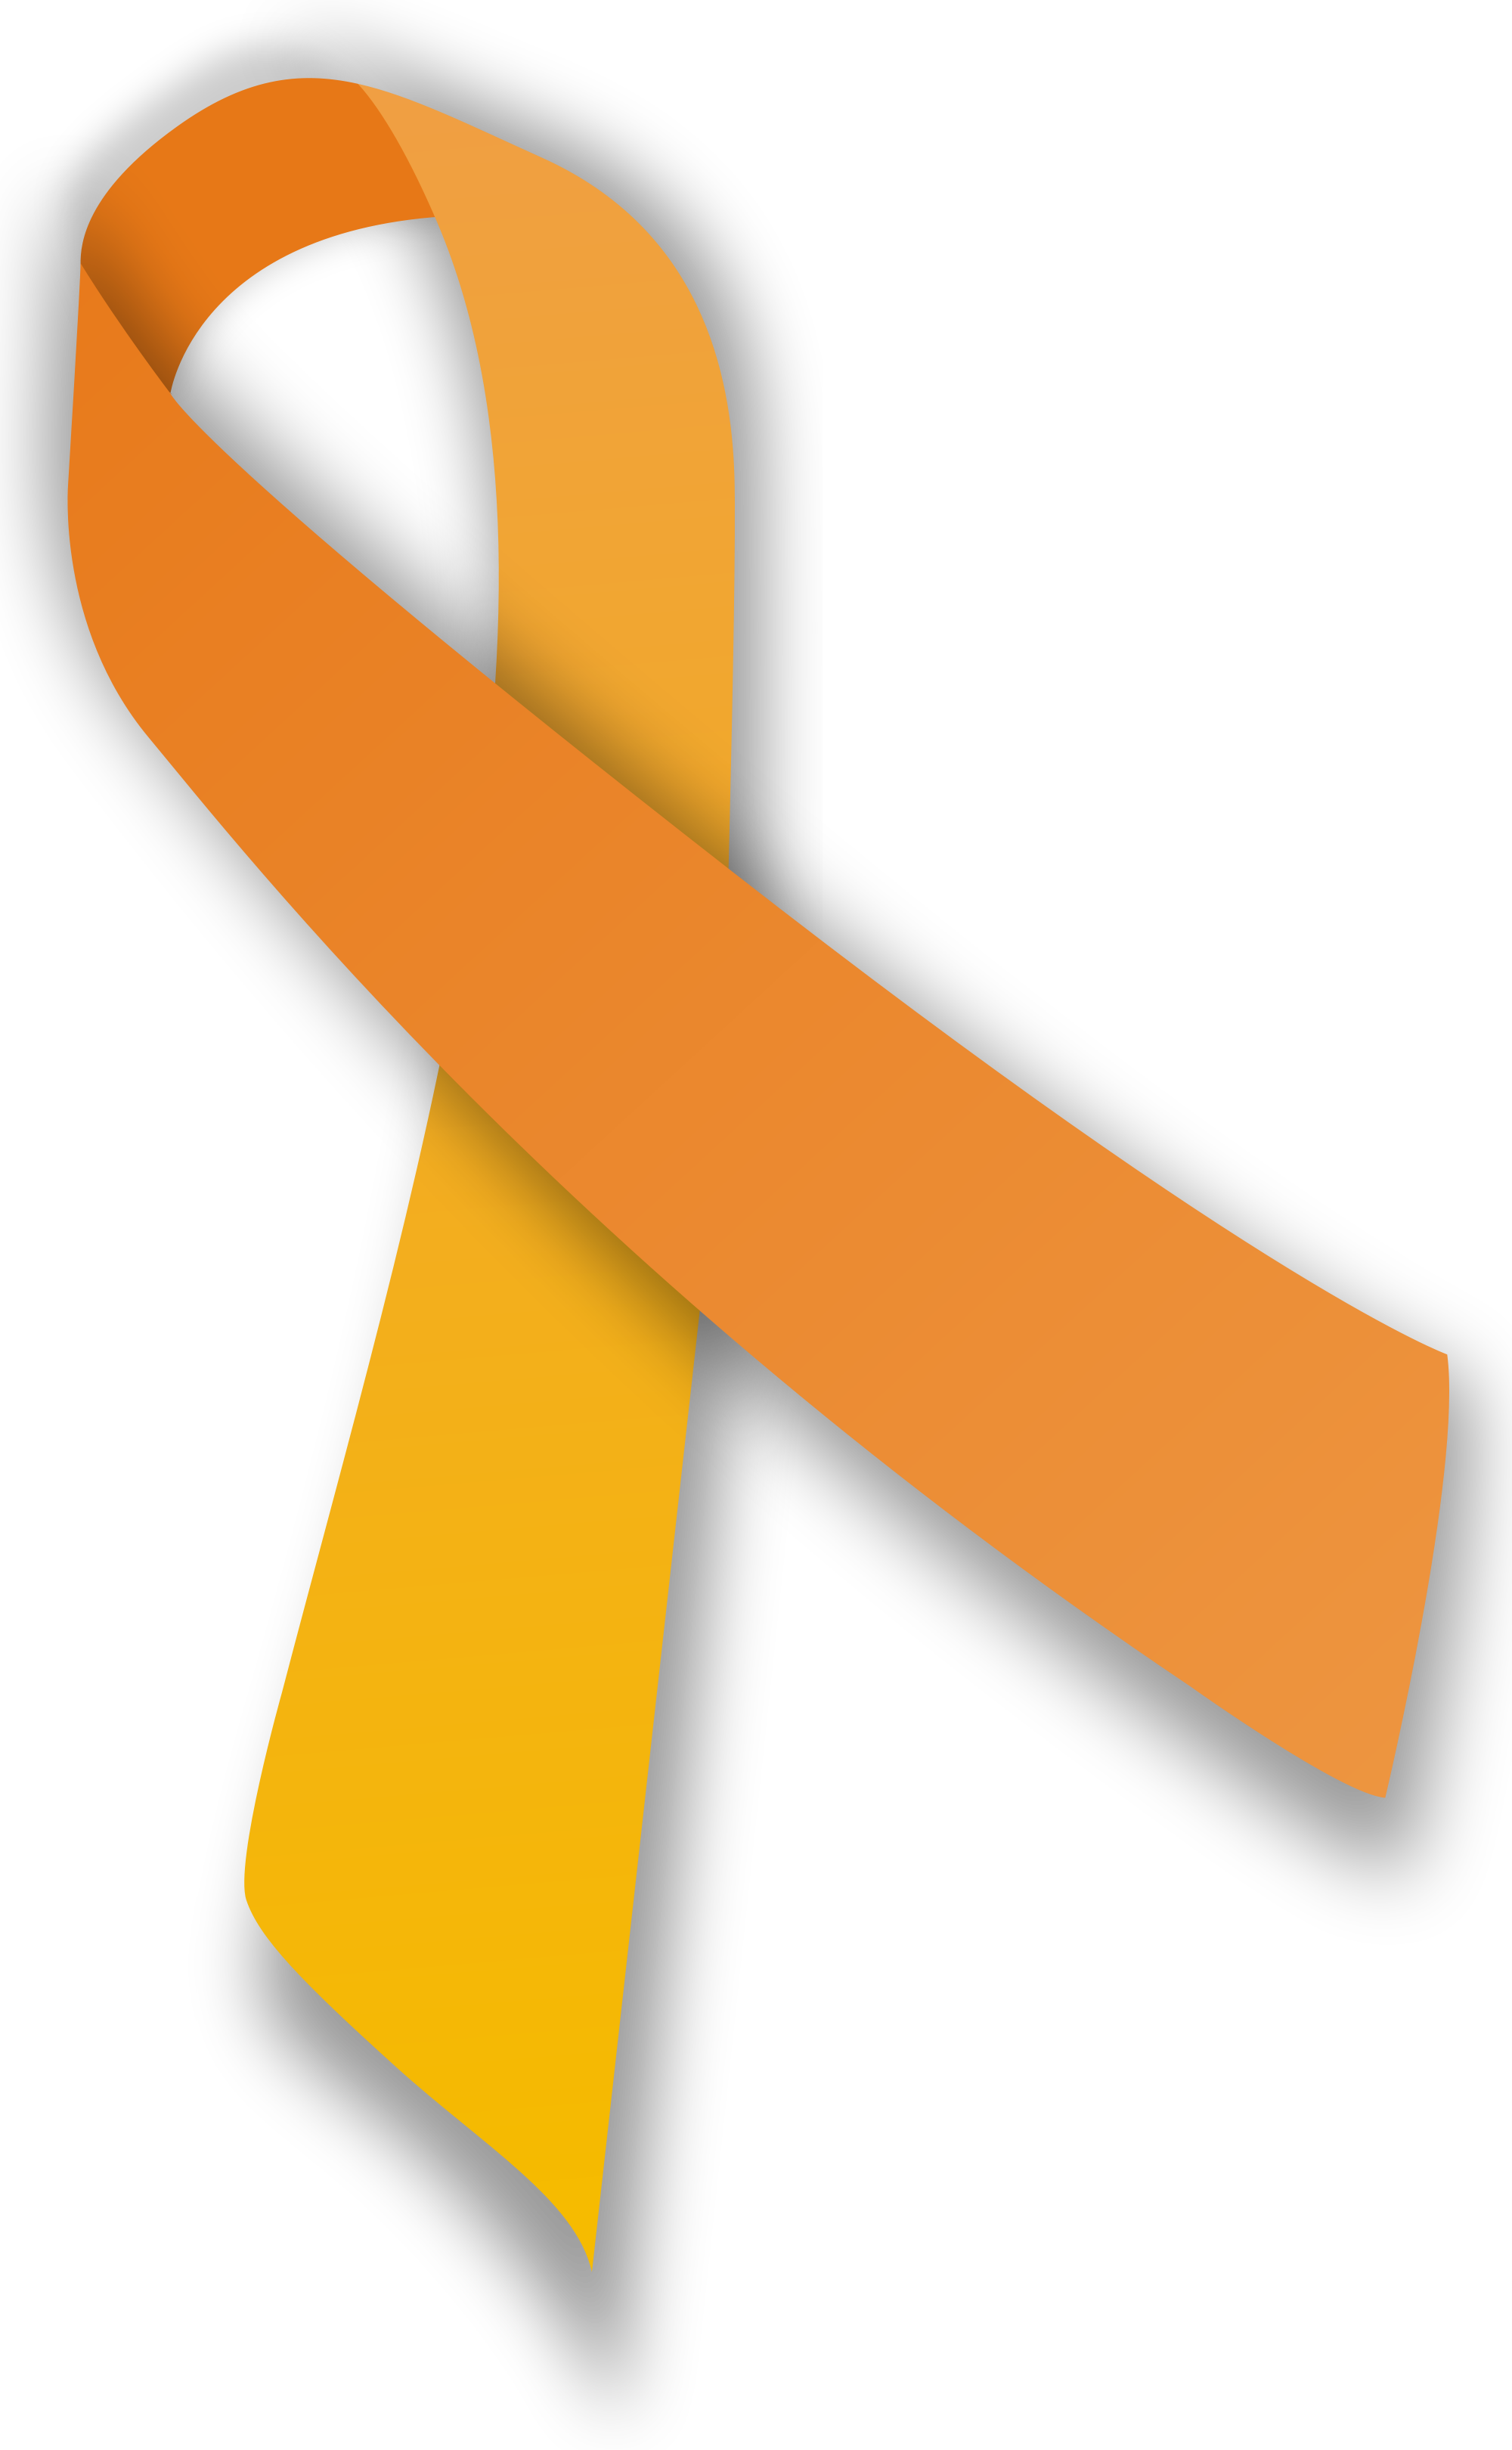 Self-injury Awareness Day - Wikipedia, the free encyclopedia